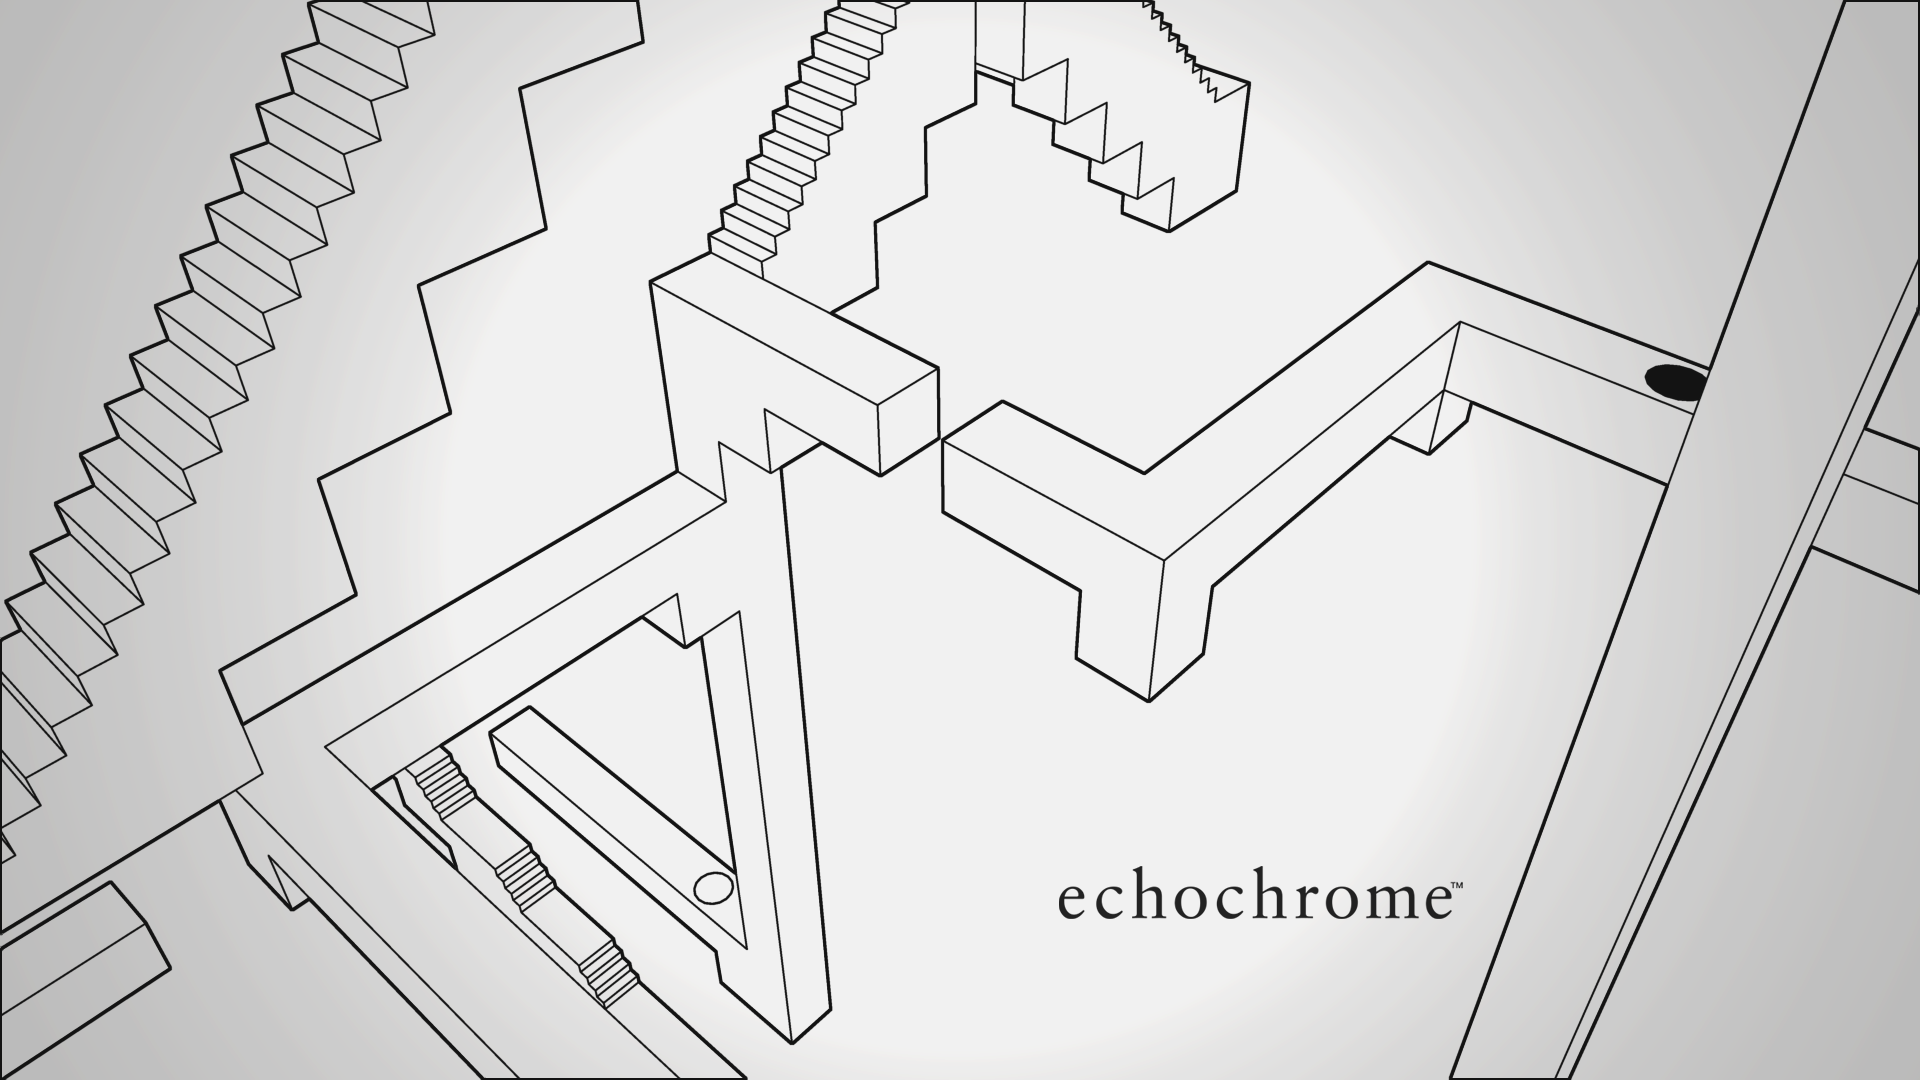 echochrome - desktop wallpaper